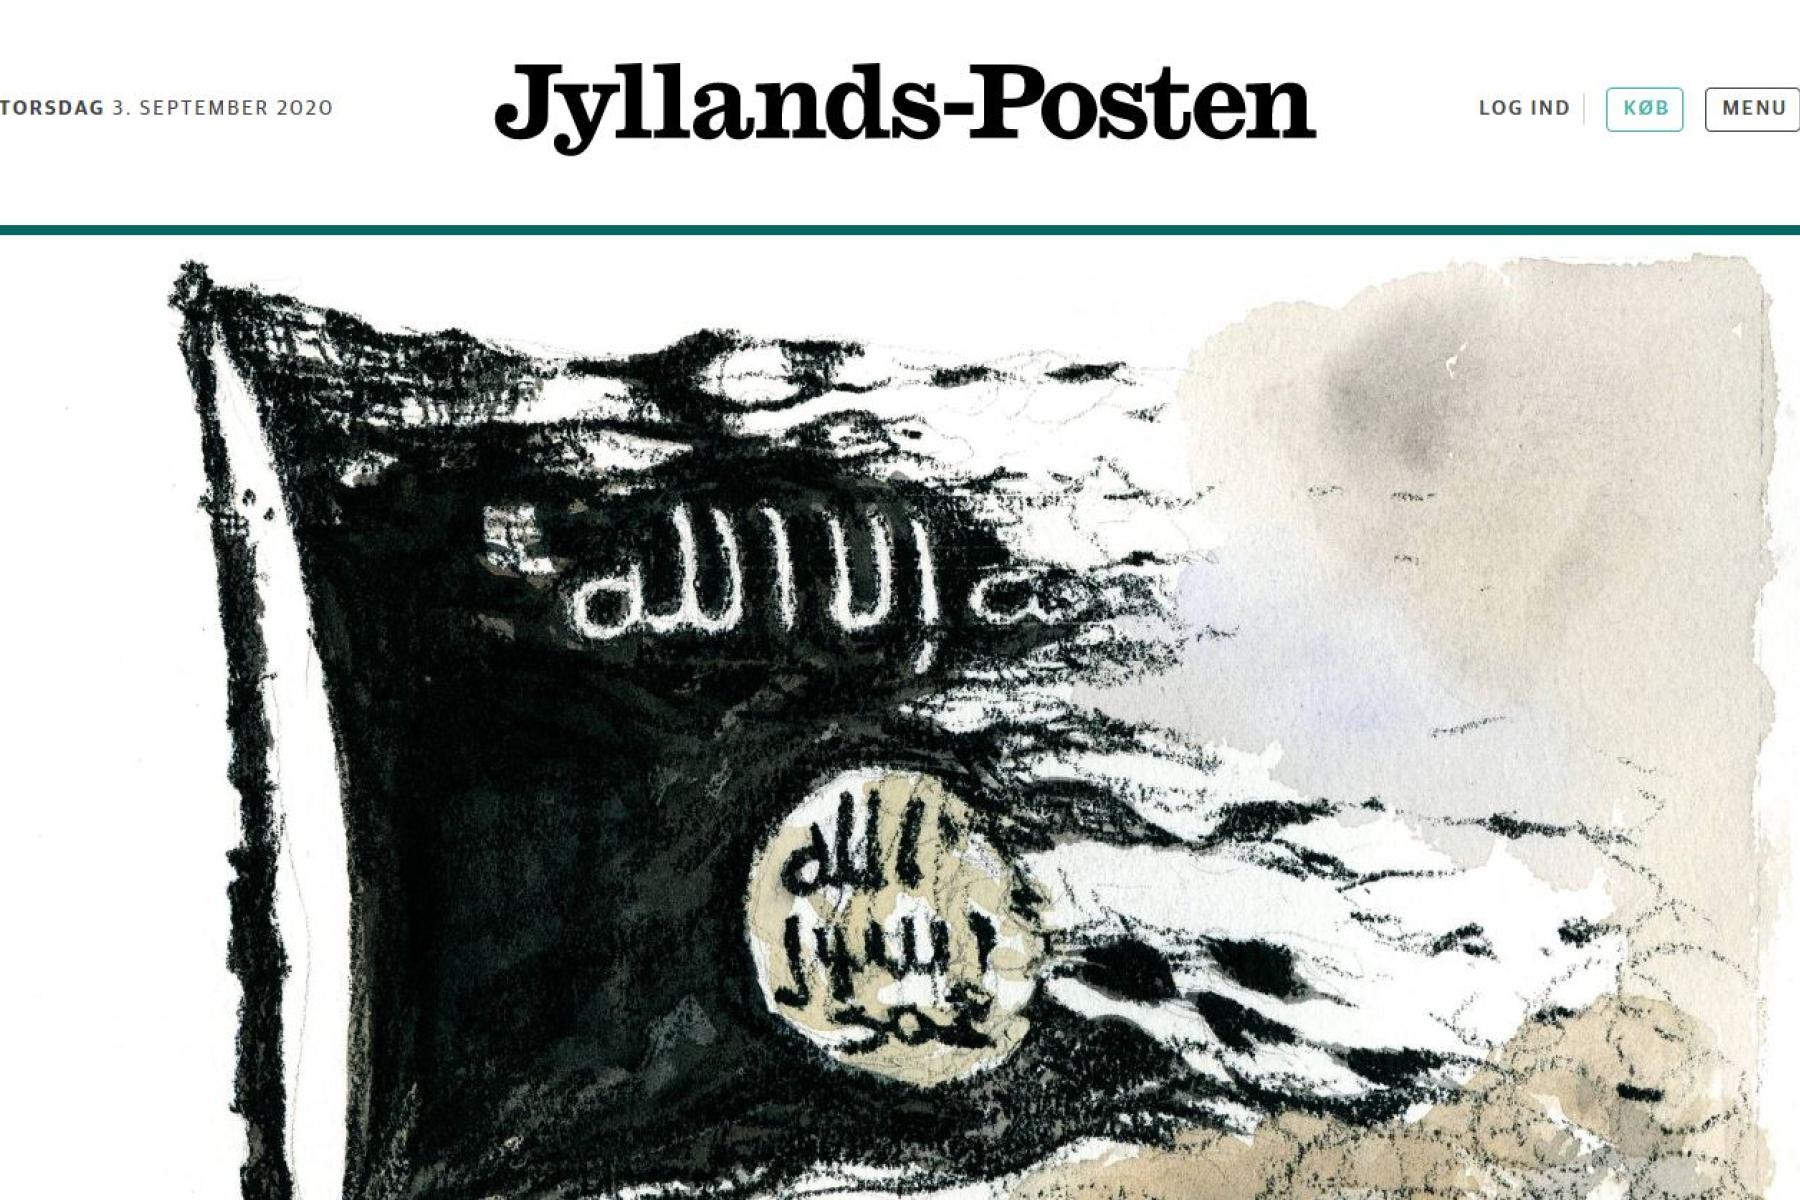 Udklip fra artikel i Jyllands-Posten